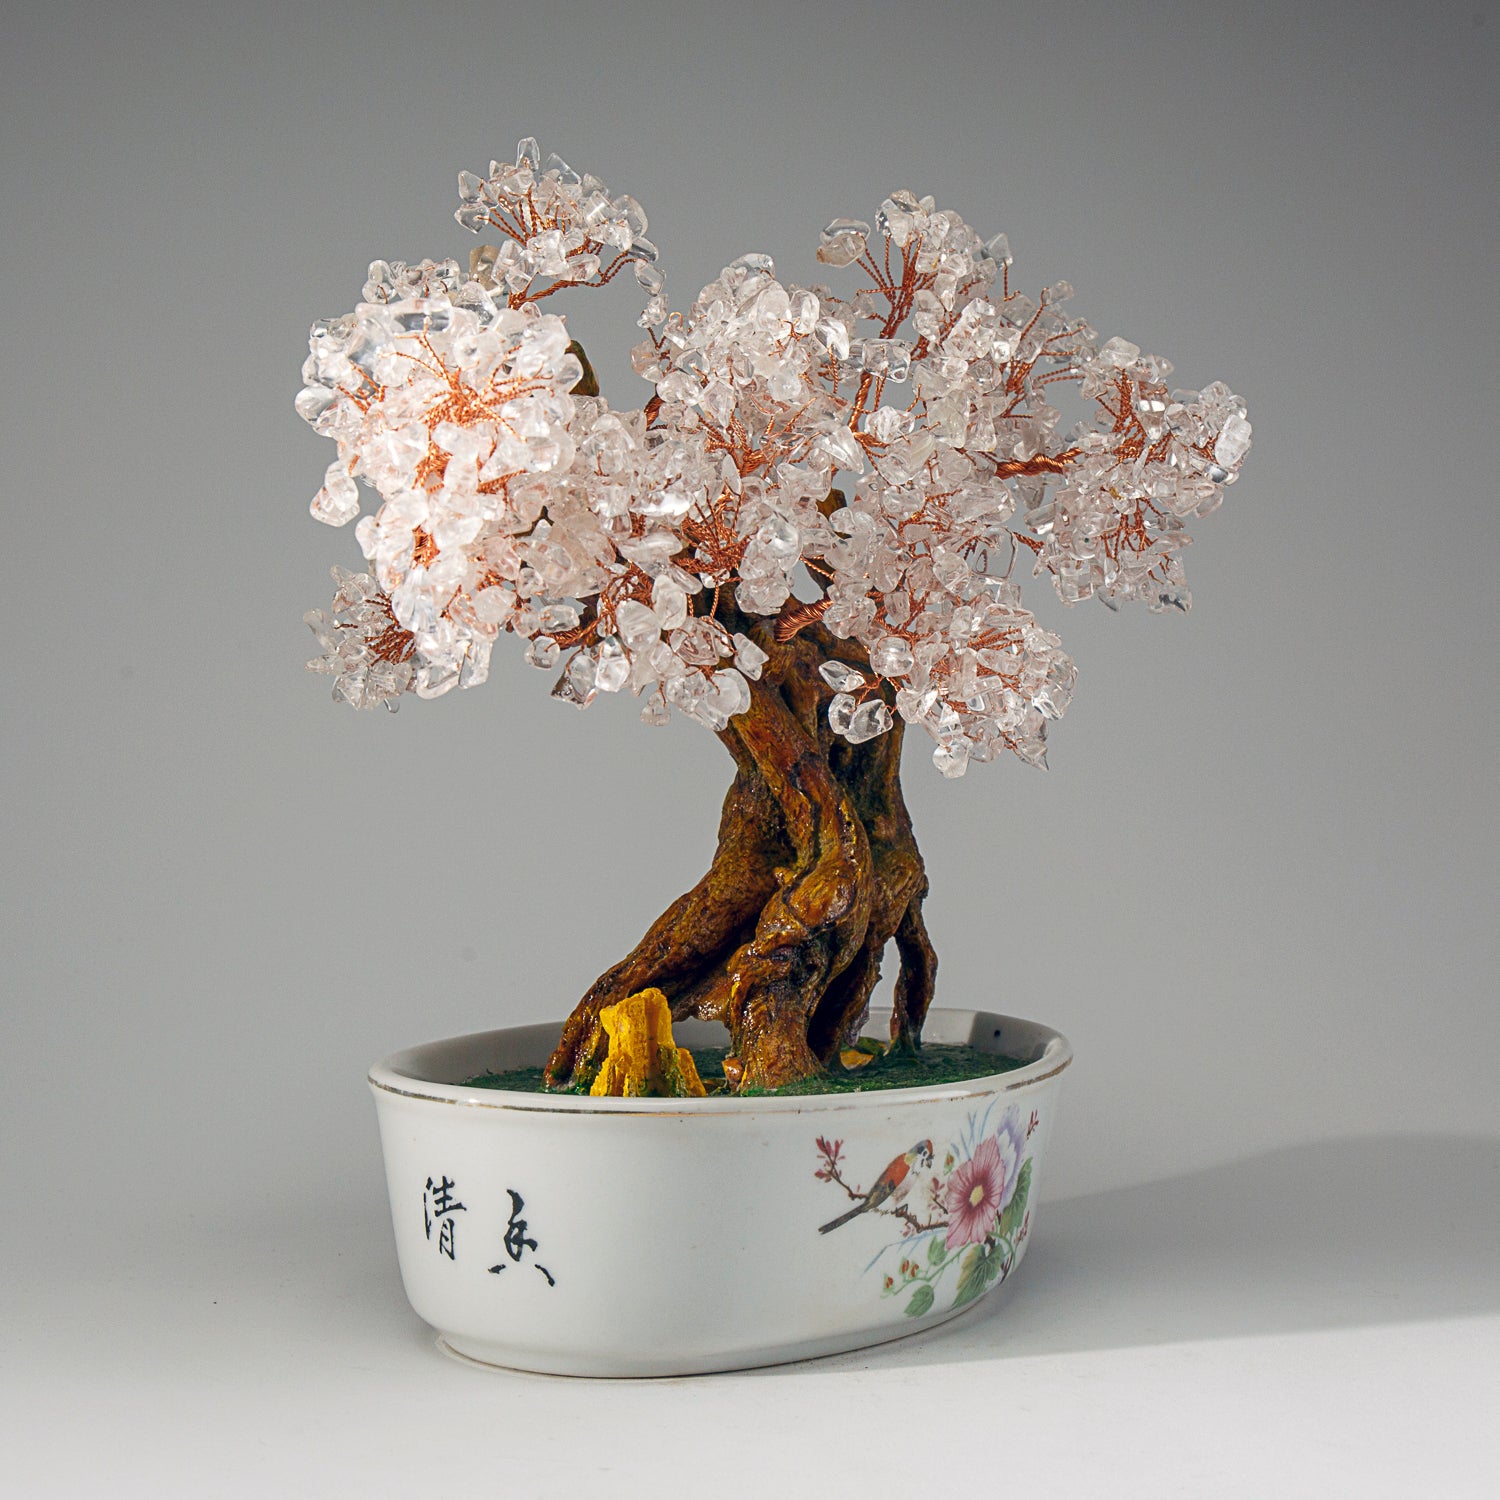 Genuine Quartz Gemstone Bonsai Tree in Oval Ceramic Pot (10” Tall)